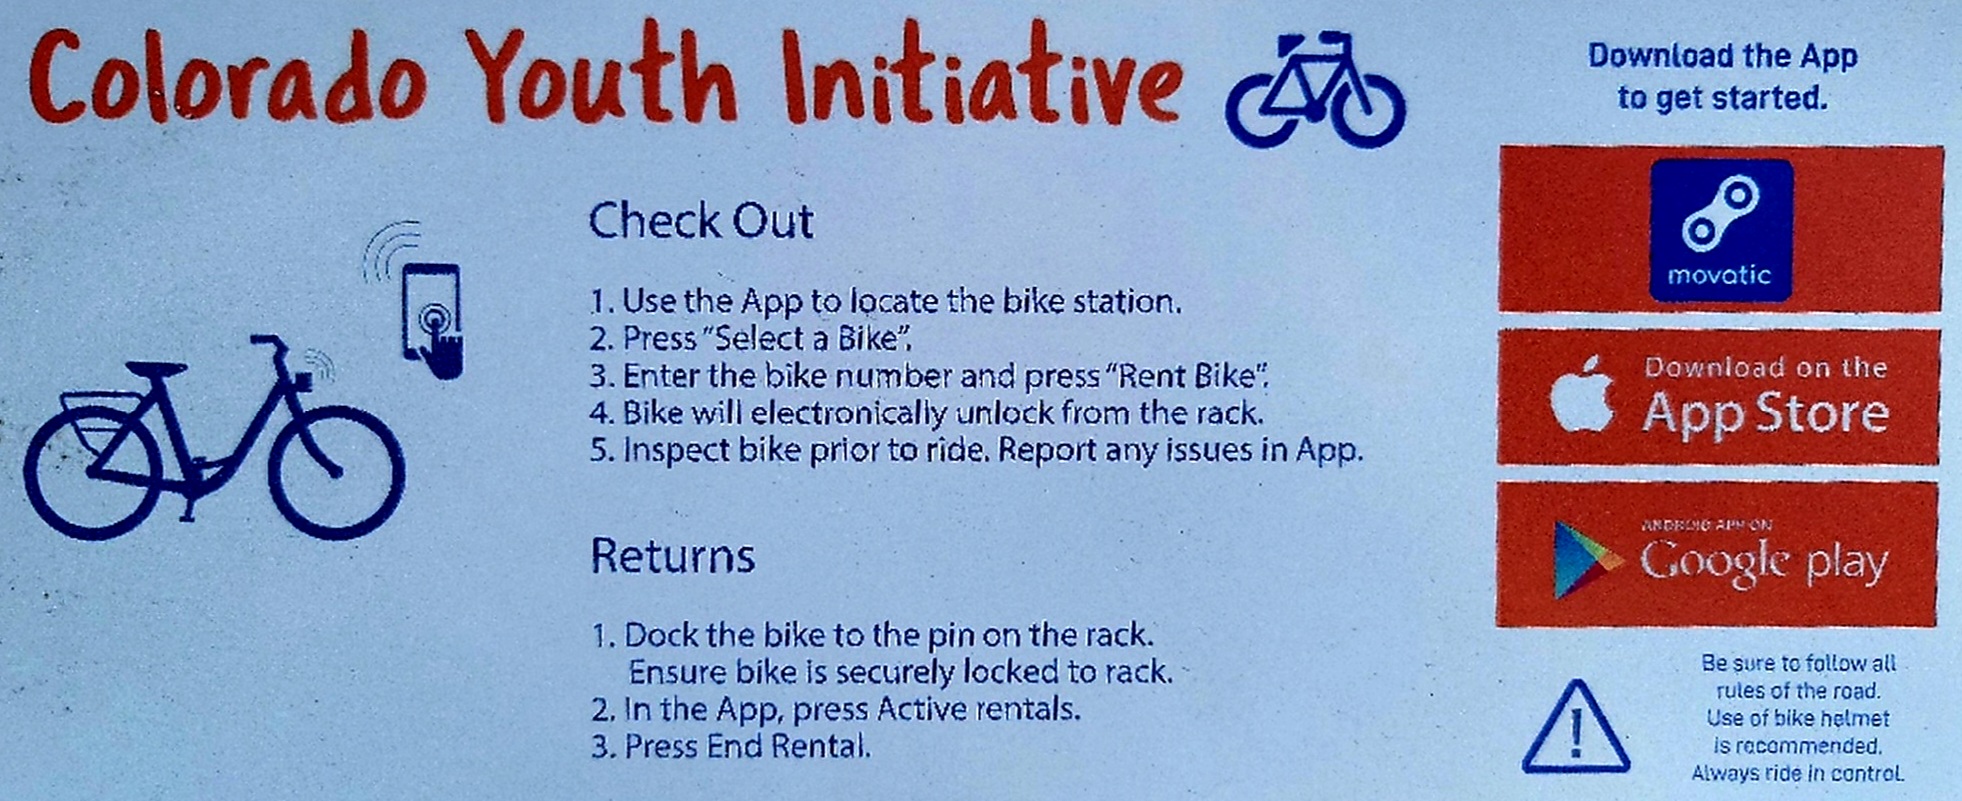 Colorado Youth Initiative Bicycle Share La Junta SECO News seconews.org